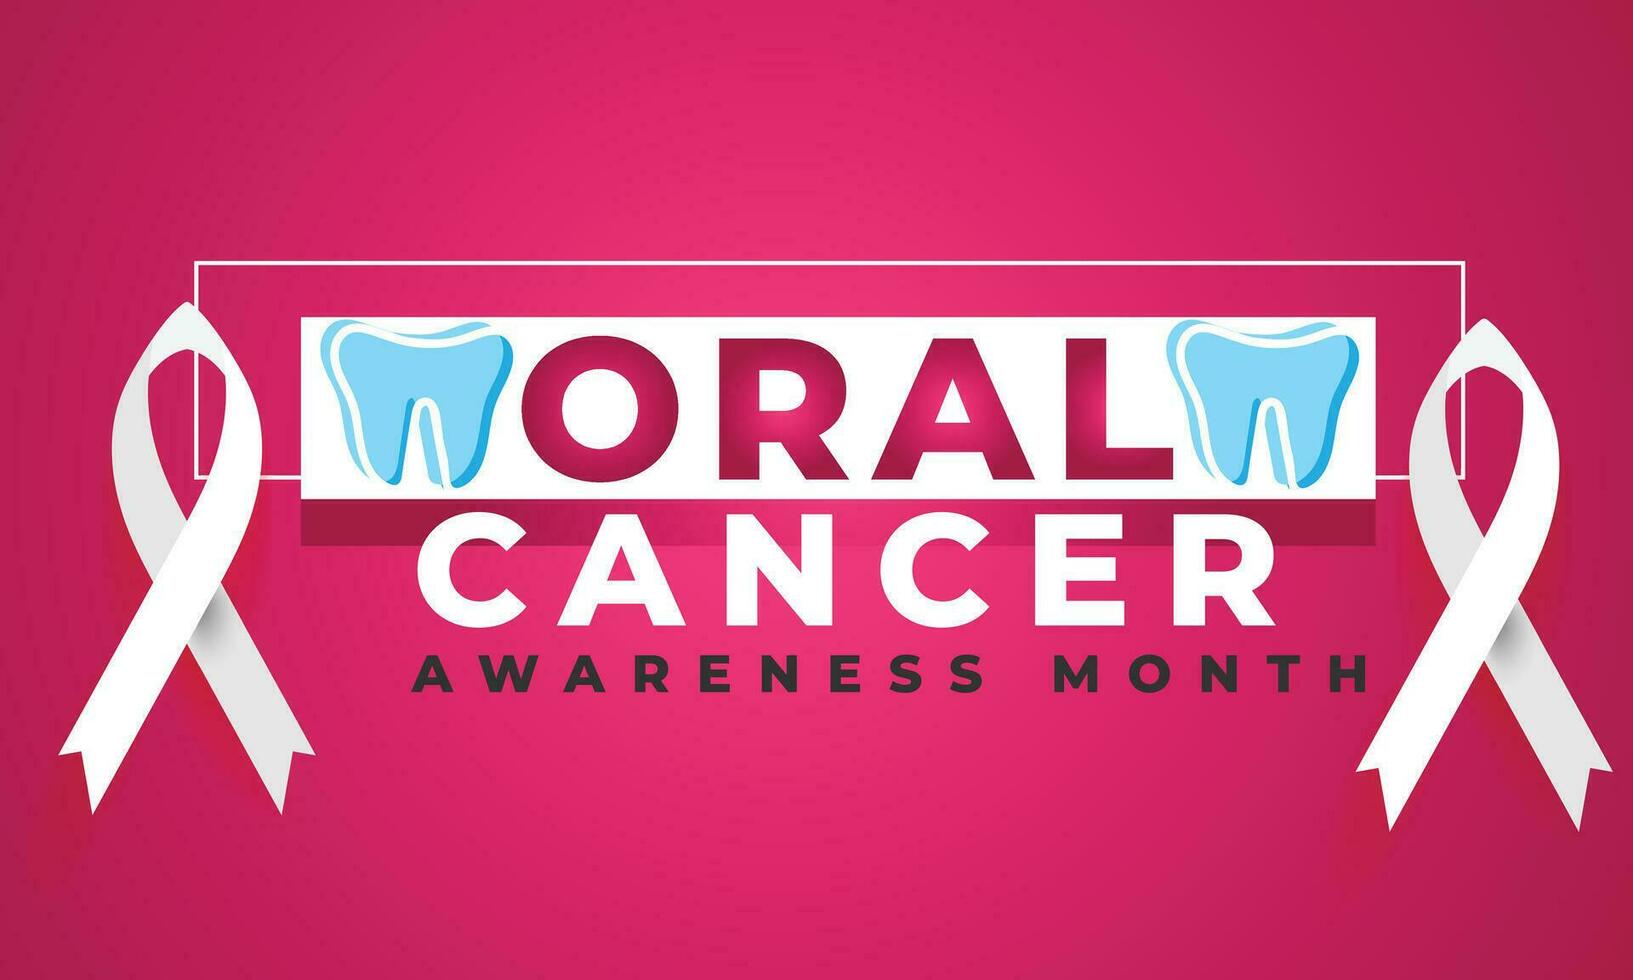 oral cancer medvetenhet månad. bakgrund, baner, kort, affisch, mall. vektor illustration.